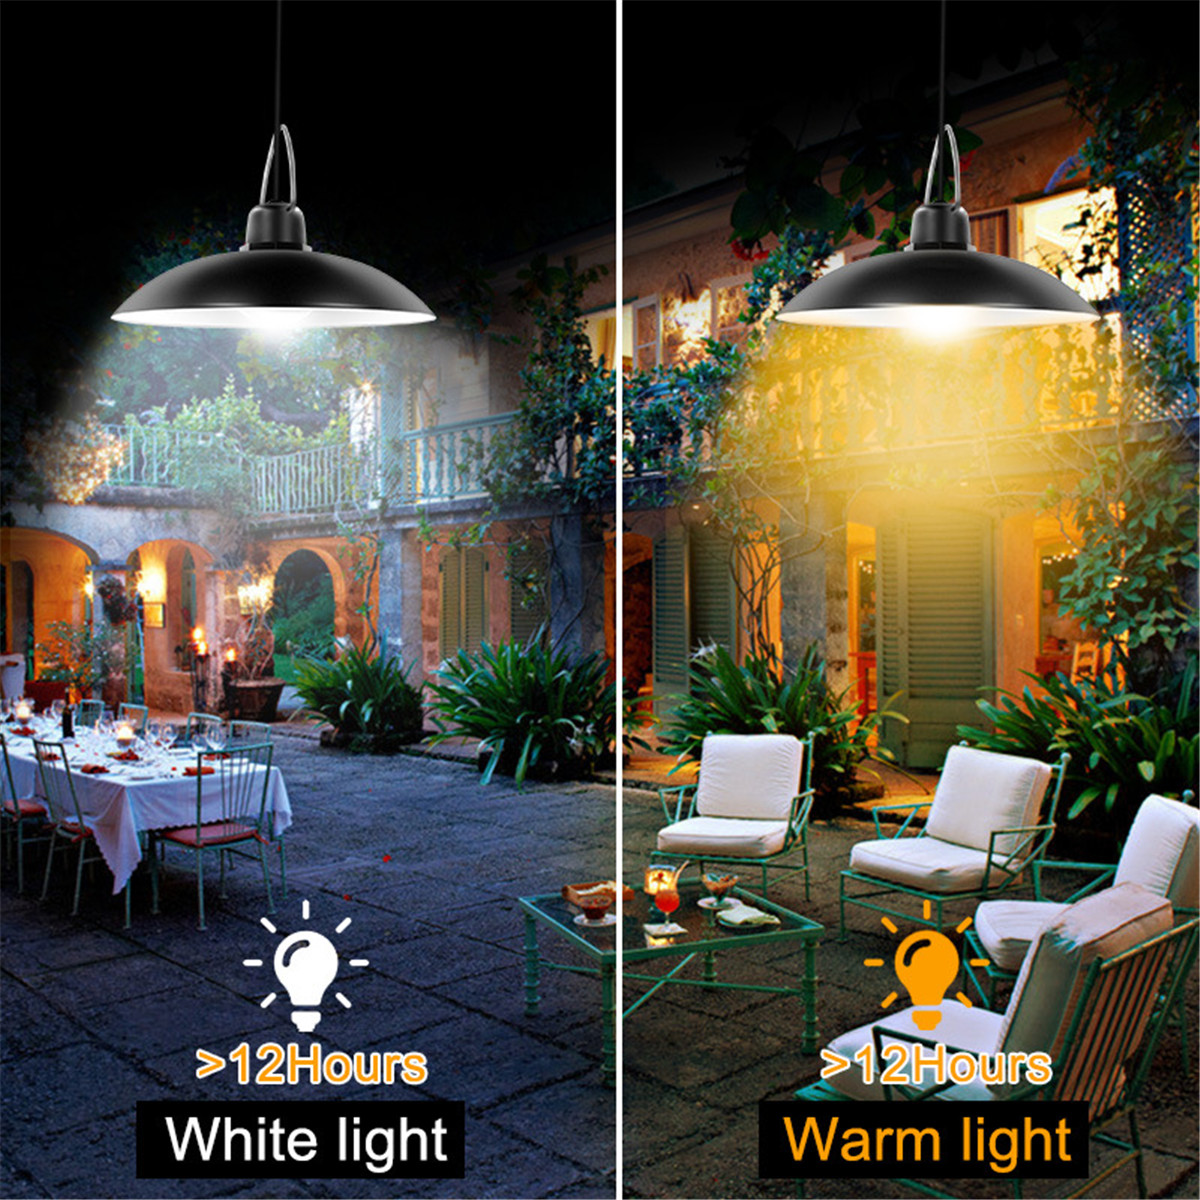 260-Lumen-Solar-Pendant-Light-Outdoor-Indoor-Solar-Lamp-With-Line-Warm-WhiteWhite-Lighting-For-Campi-1761765-4